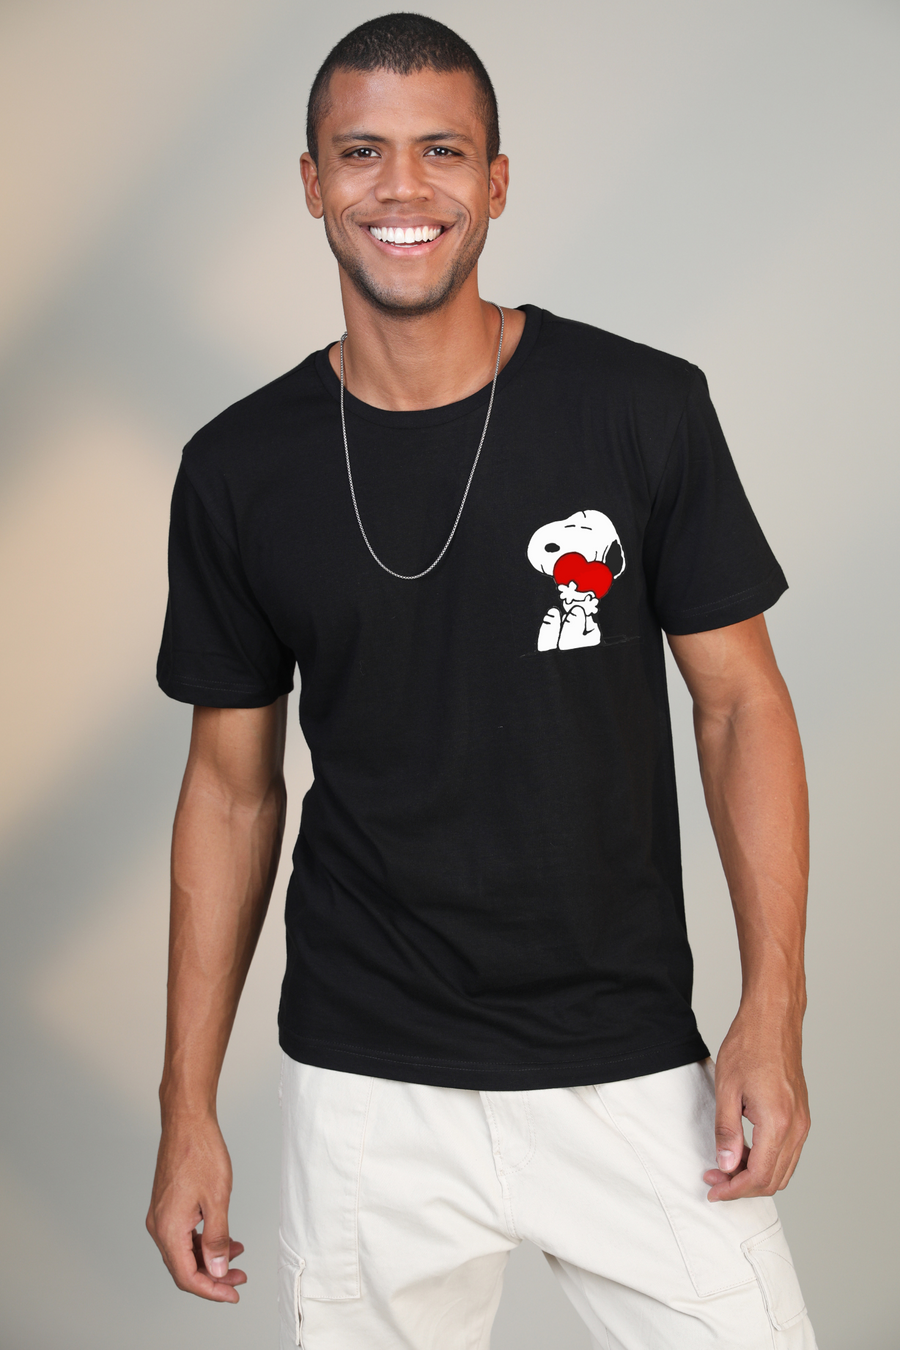 Botnia x VB Mr. Peanuts- Half sleeve t-shirt